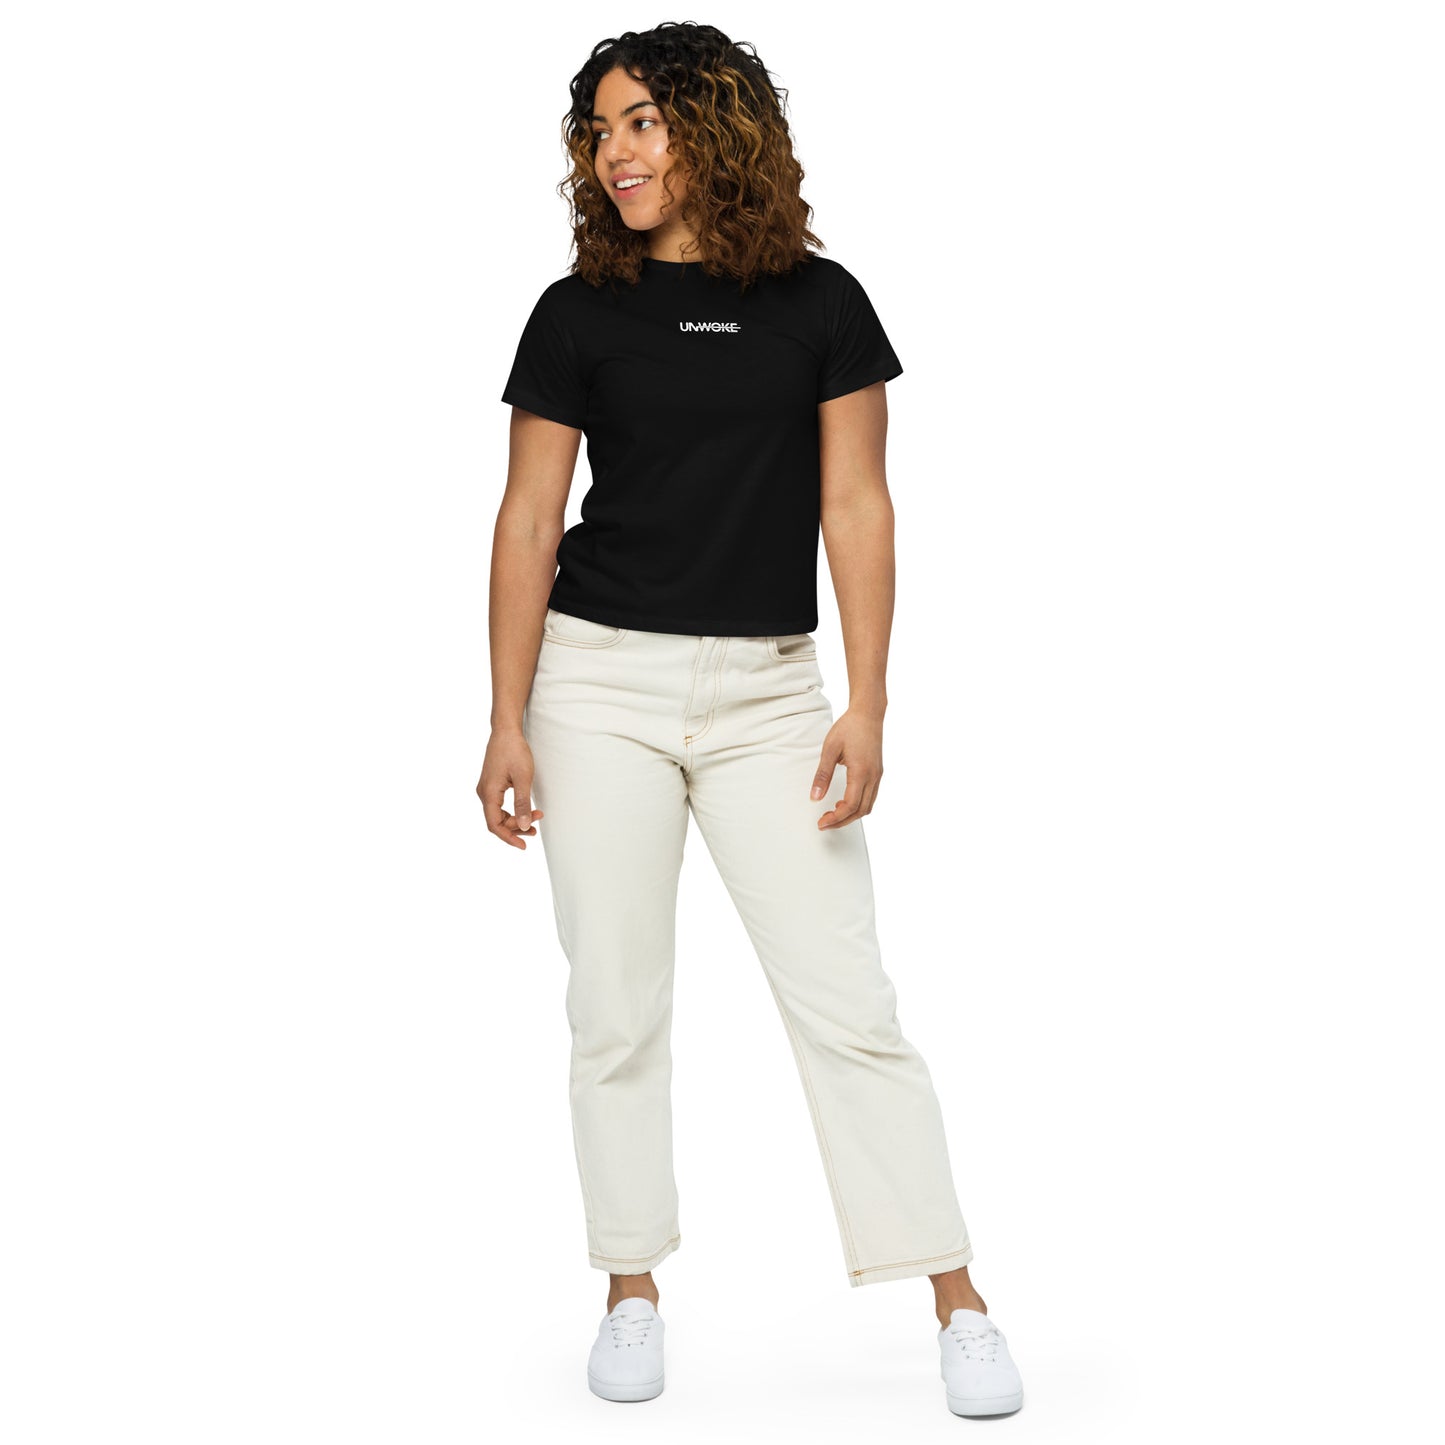 Unwoke Women’s minimalist high-waisted t-shirt